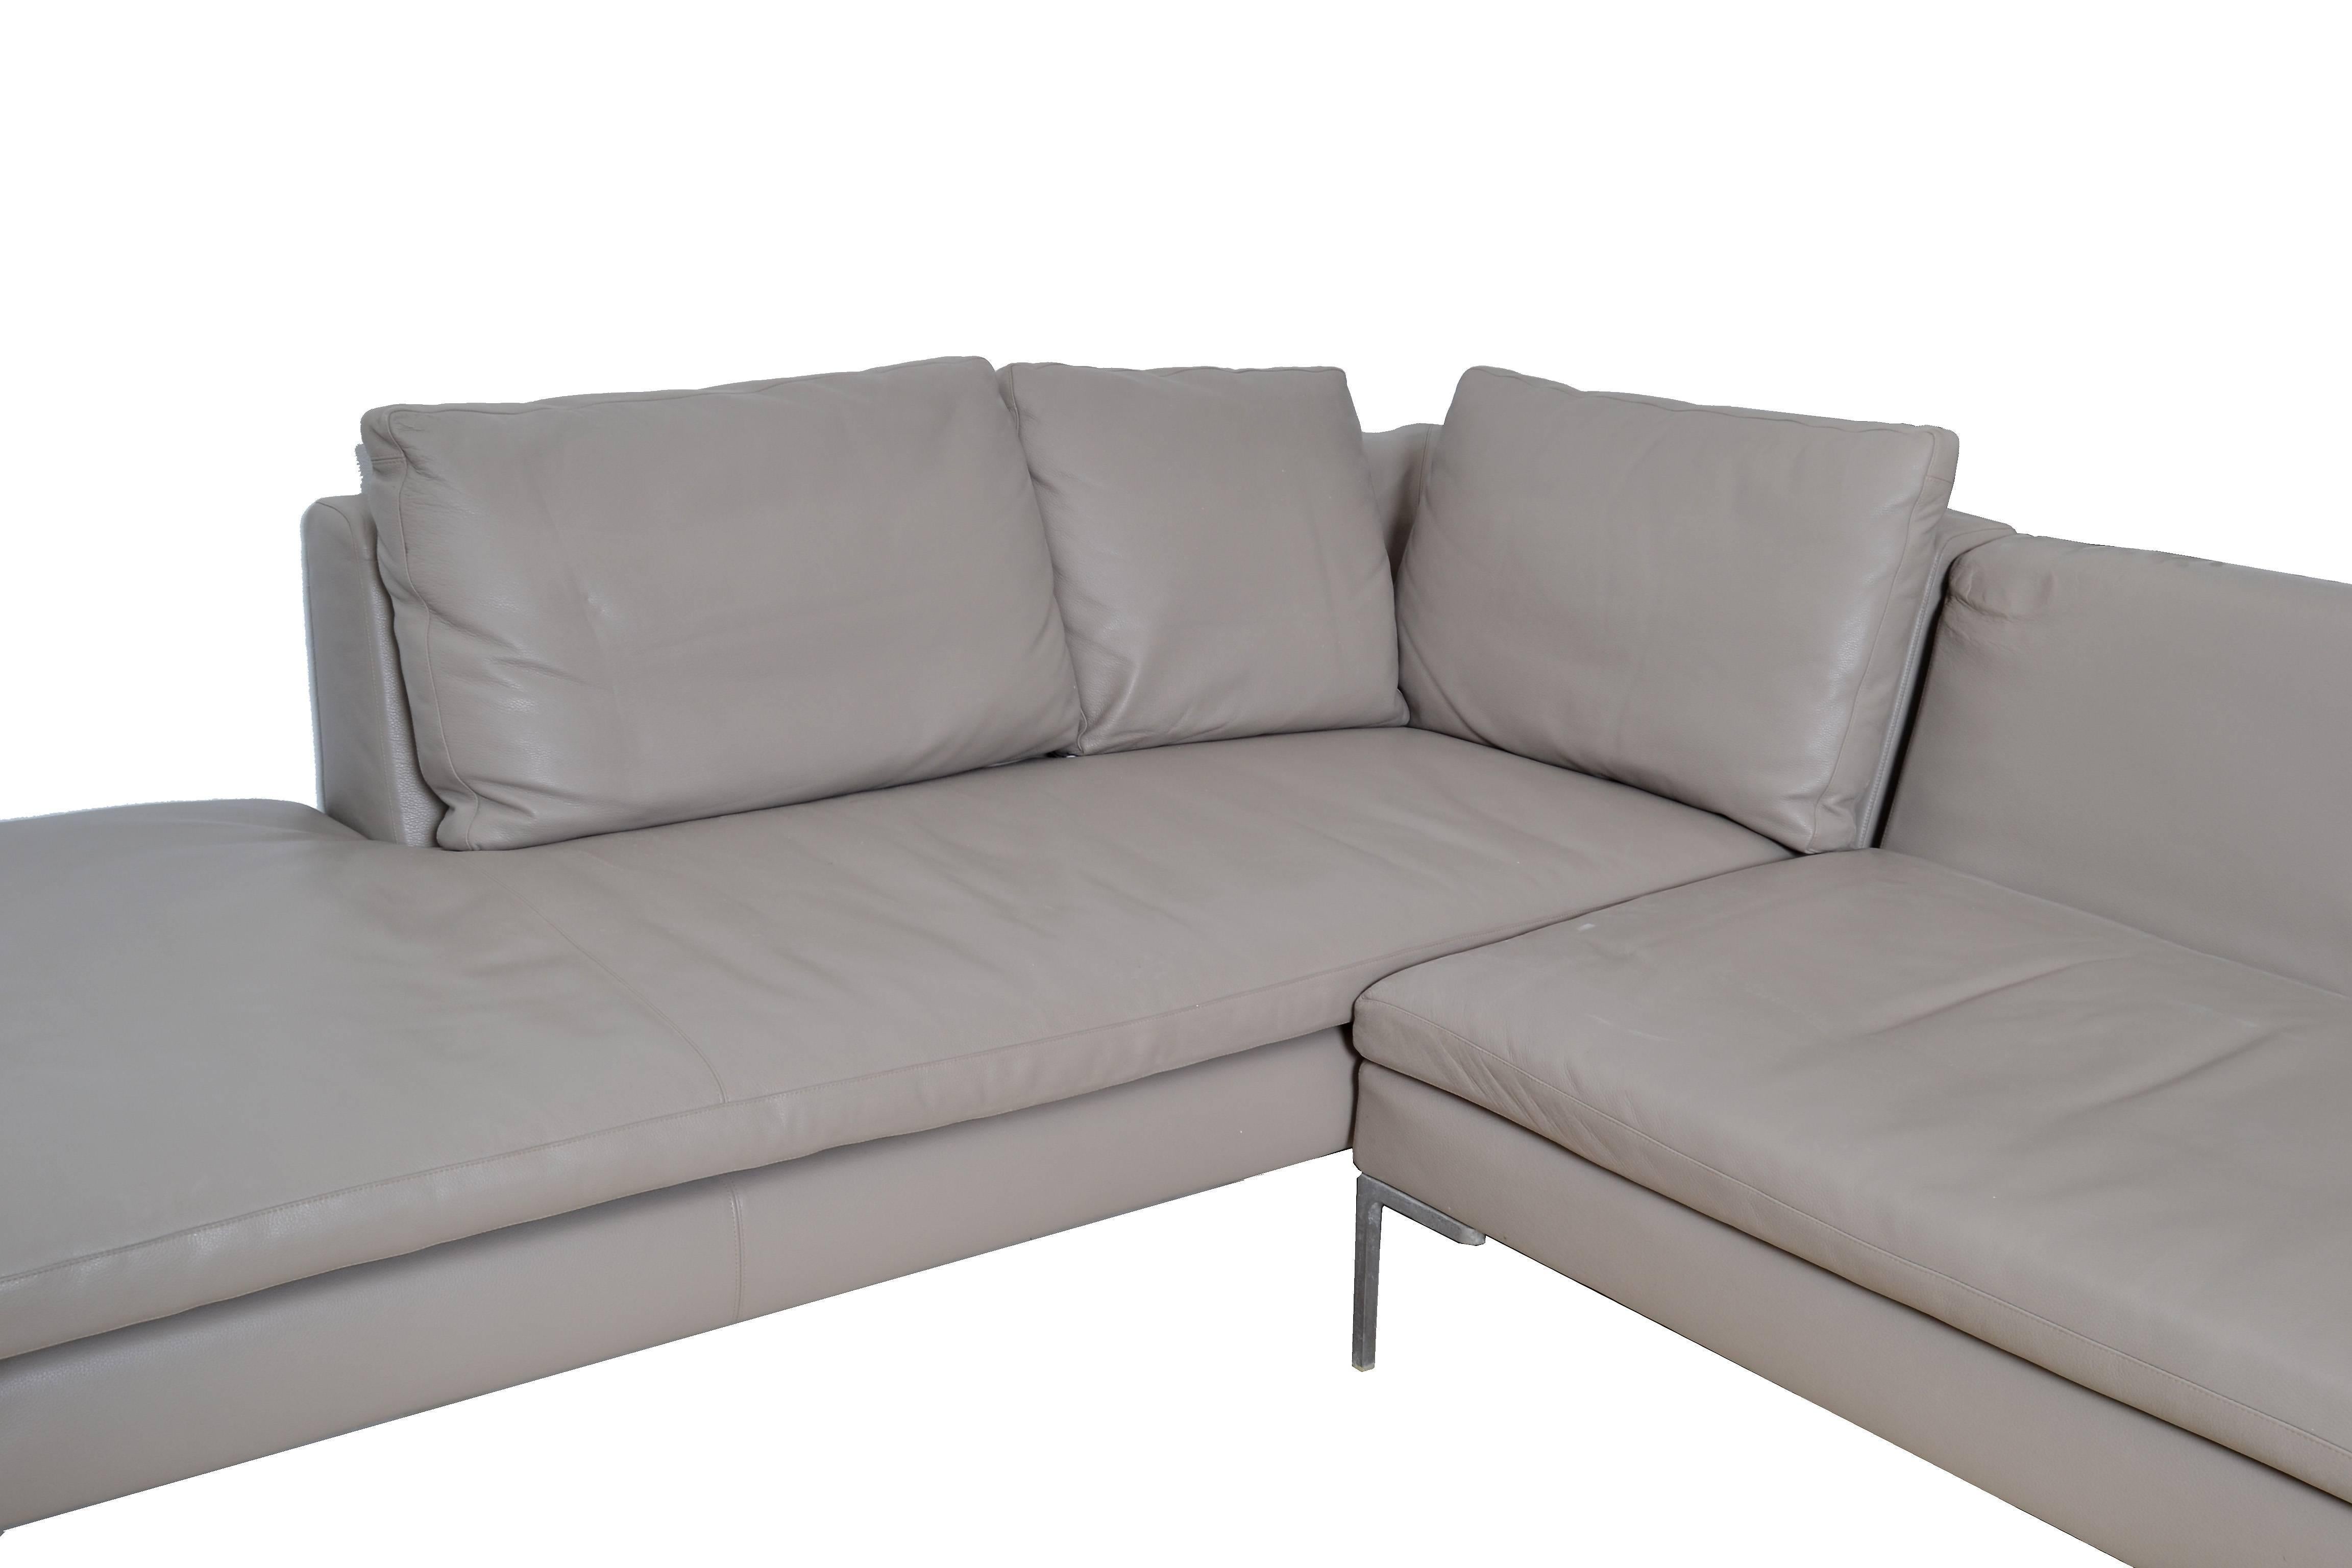 Mid-Century Modern Original B&B Italia Leather Sectional Sofa